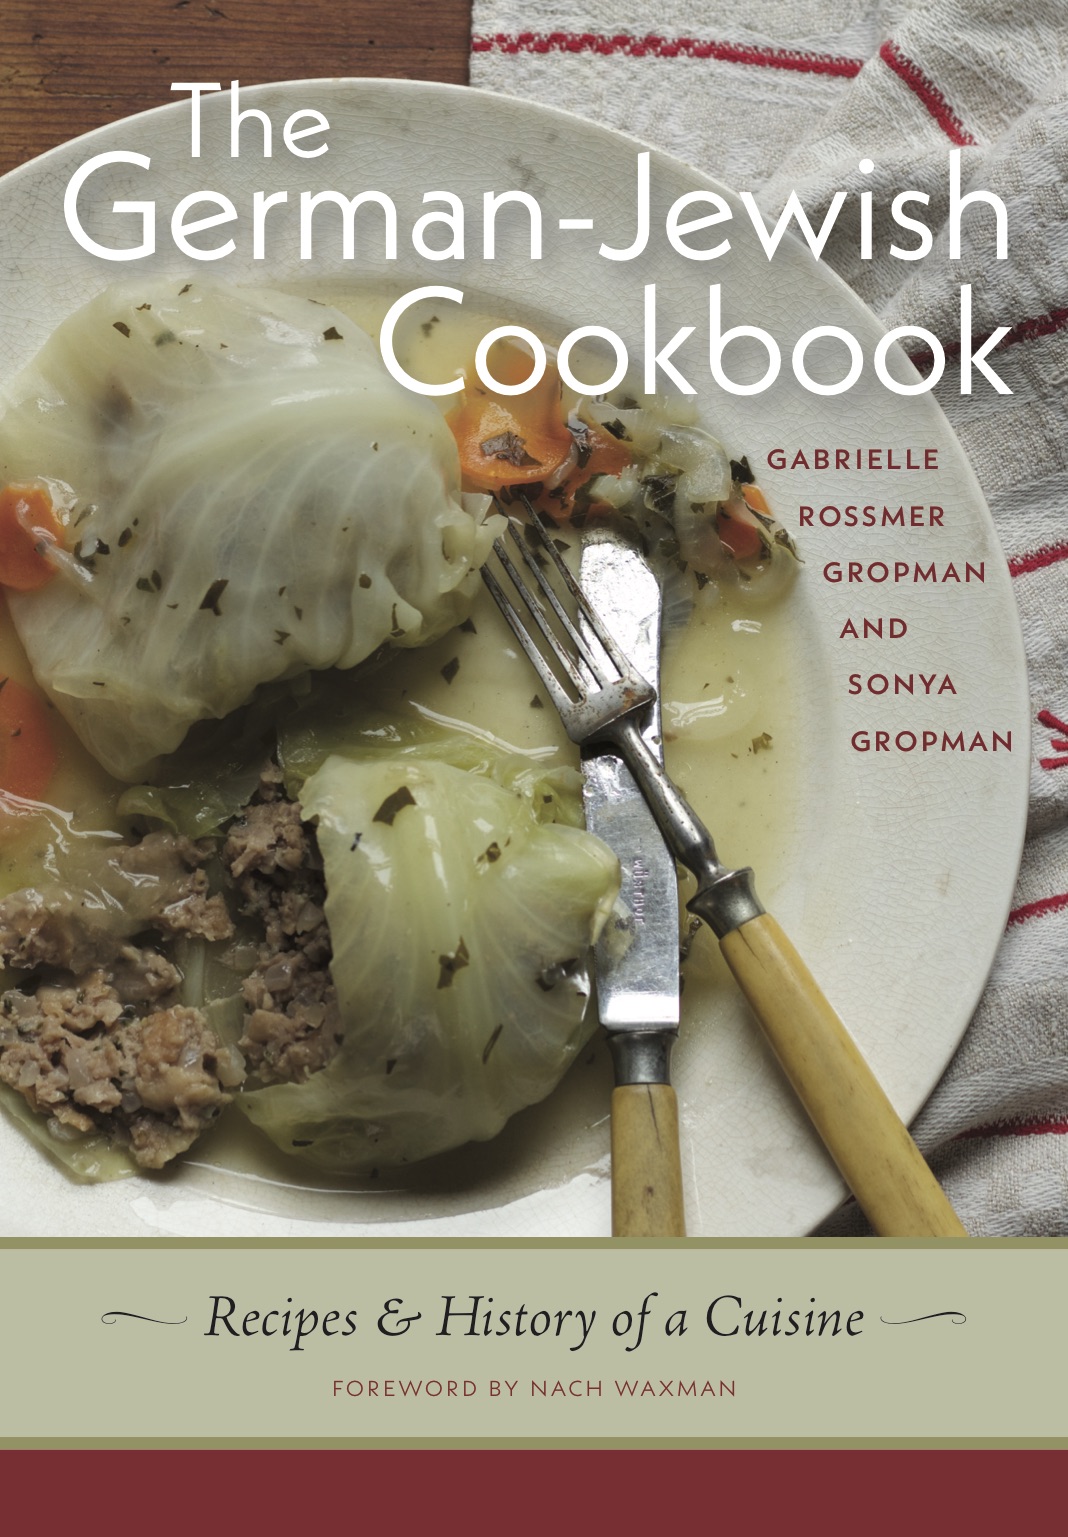 Book Launch: The German-Jewish Cookbook by Gabrielle Rossmer Gropman & Sonya Gropman — in conversation w/ Jane Ziegelman